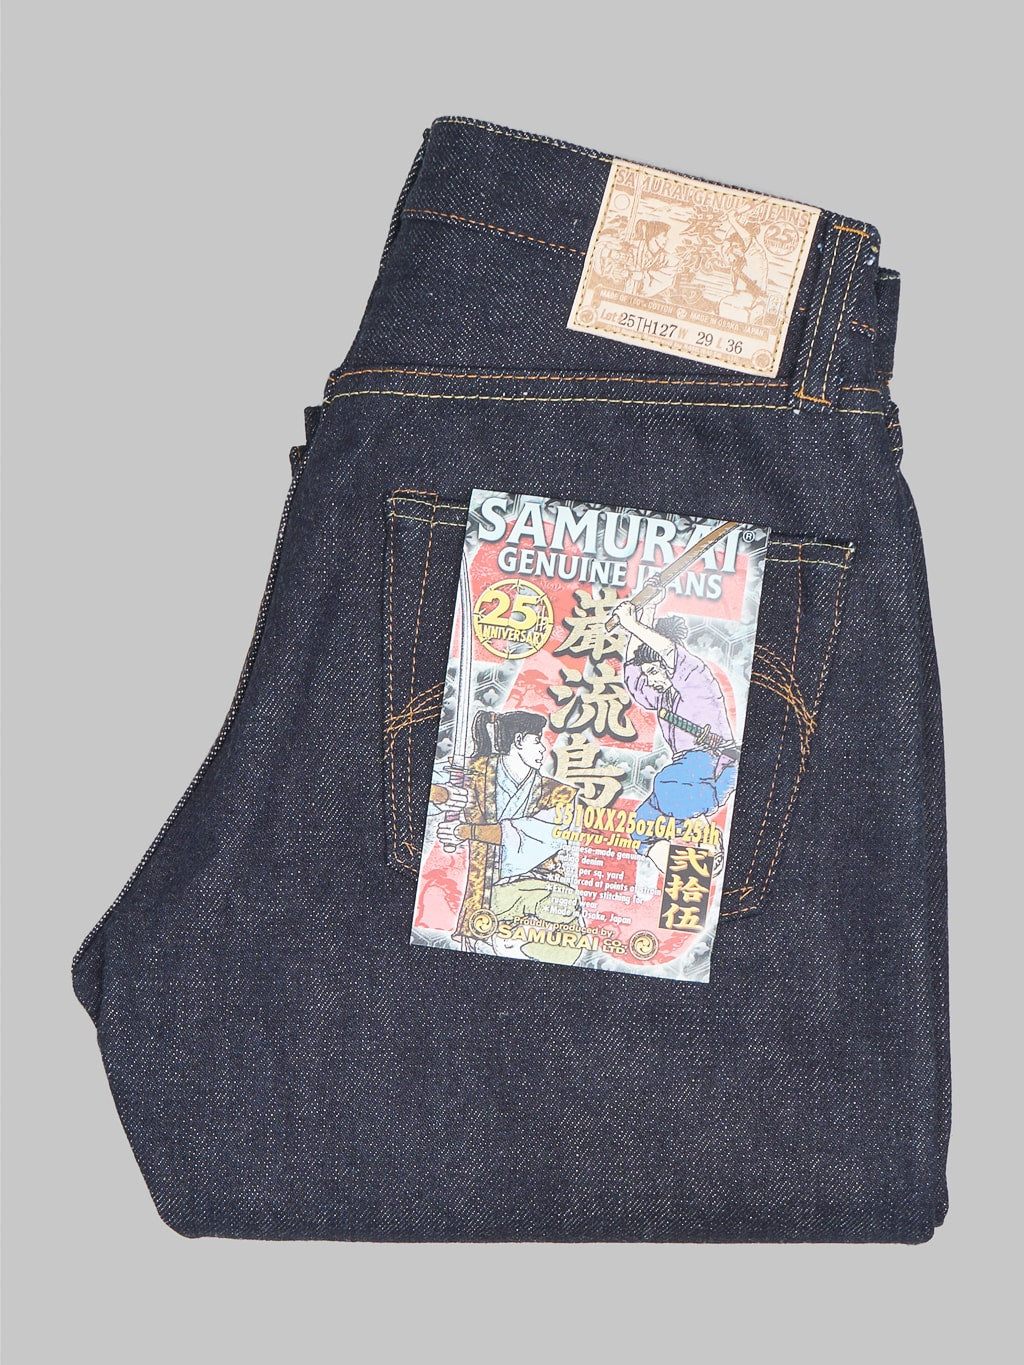 Samurai Jeans S510XX25ozGA-25th "Ganryu-Jimai" 25oz 25th Anniversary Regular Straight Jeans